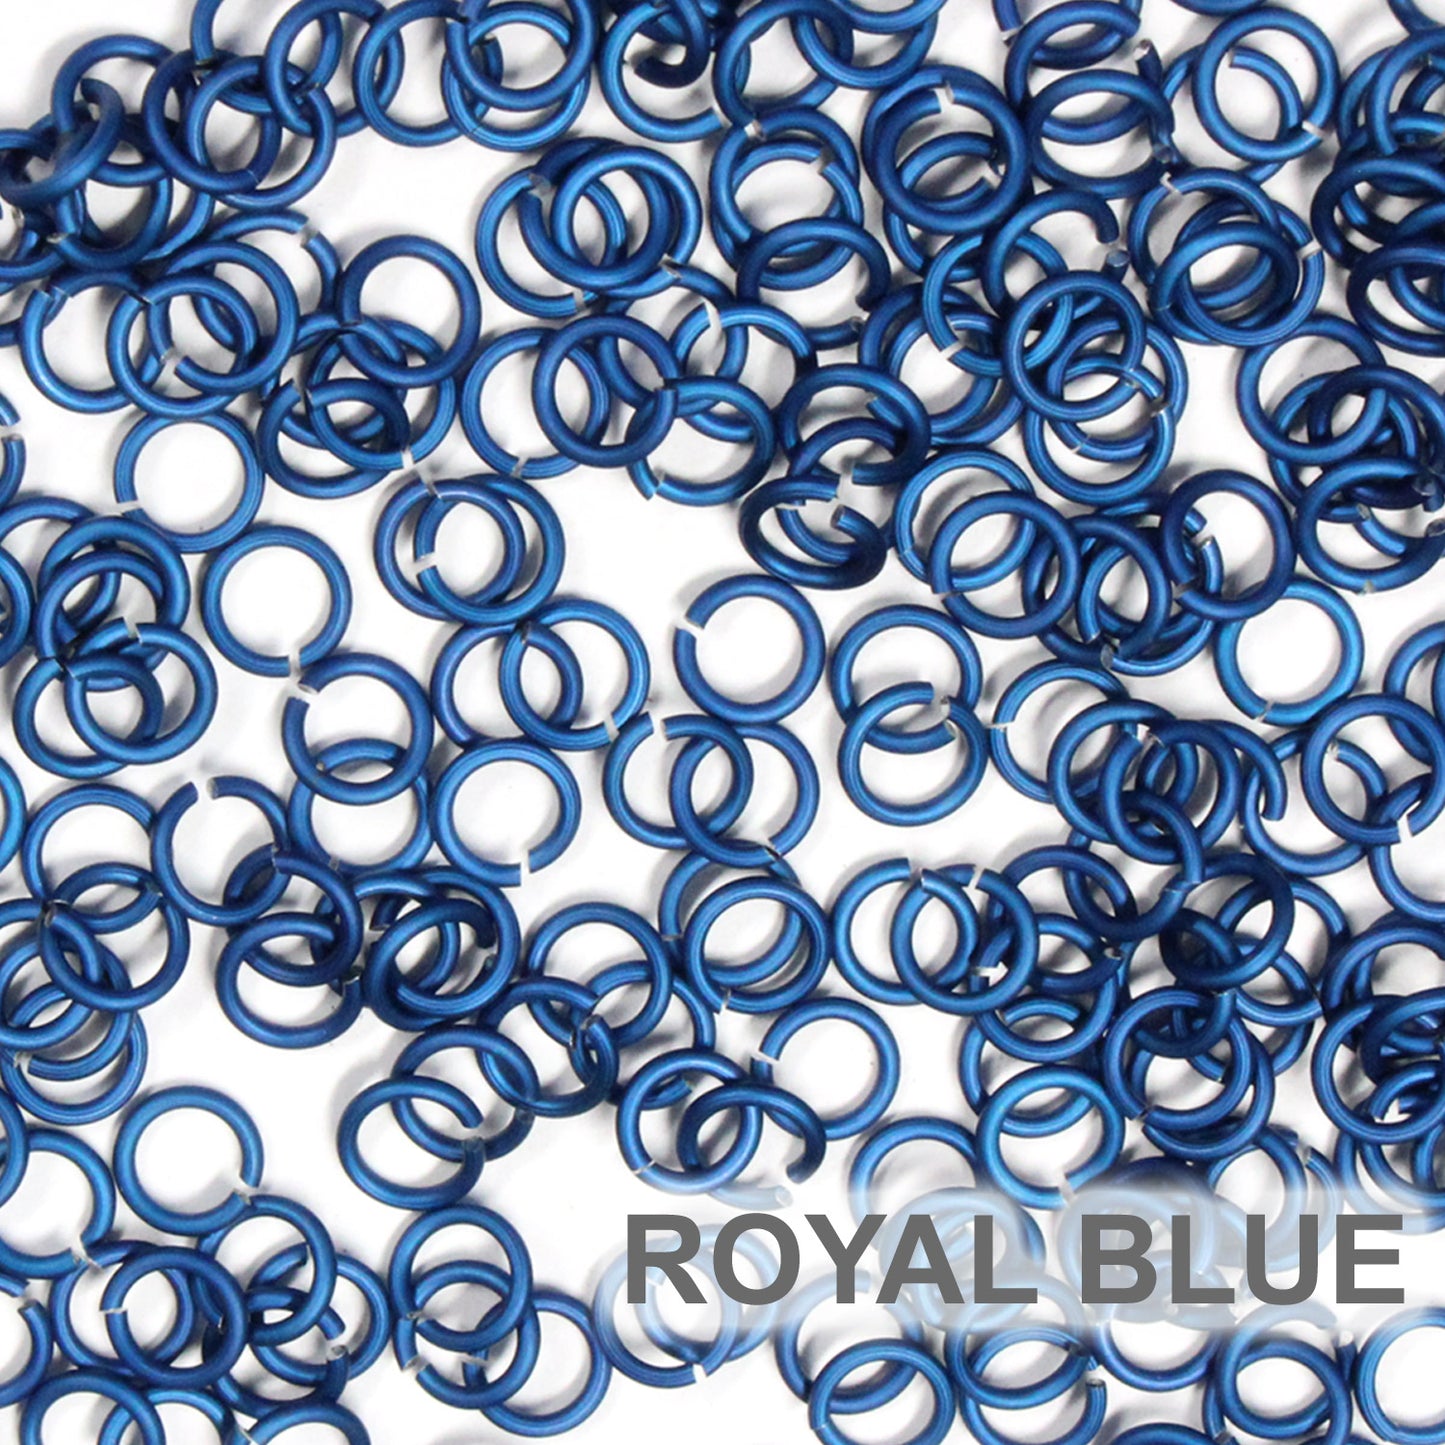 MATTE ROYAL BLUE 3.4mm 20 GA Jump Rings / 5 Gram Pack (approx 275) / sawcut round open anodized aluminum